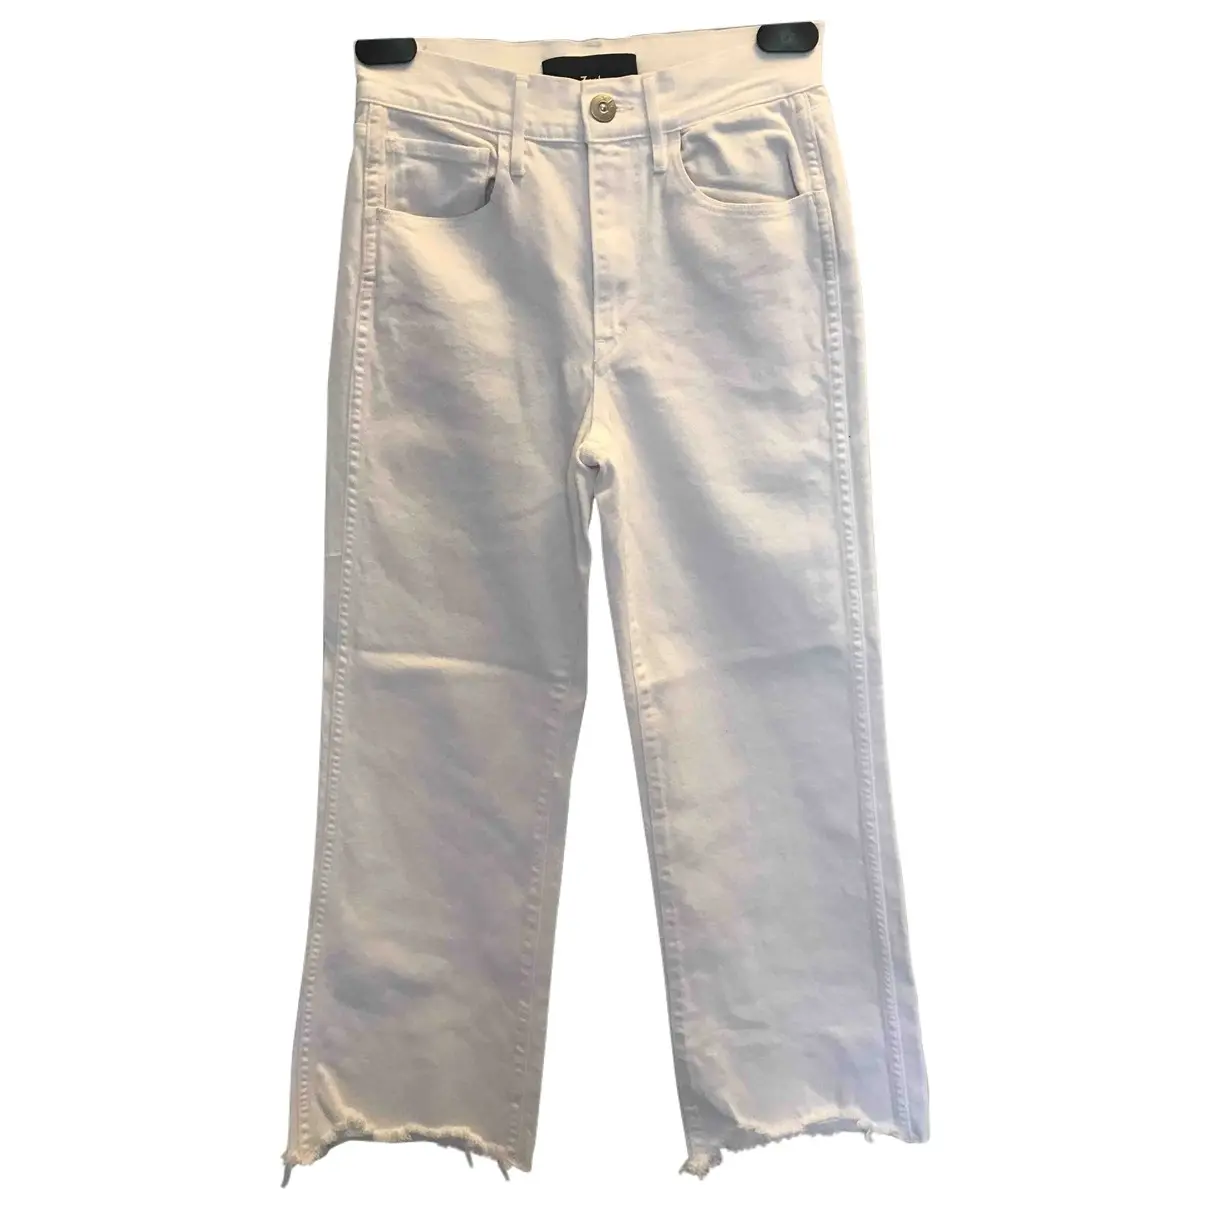 White Cotton Jeans 3x1